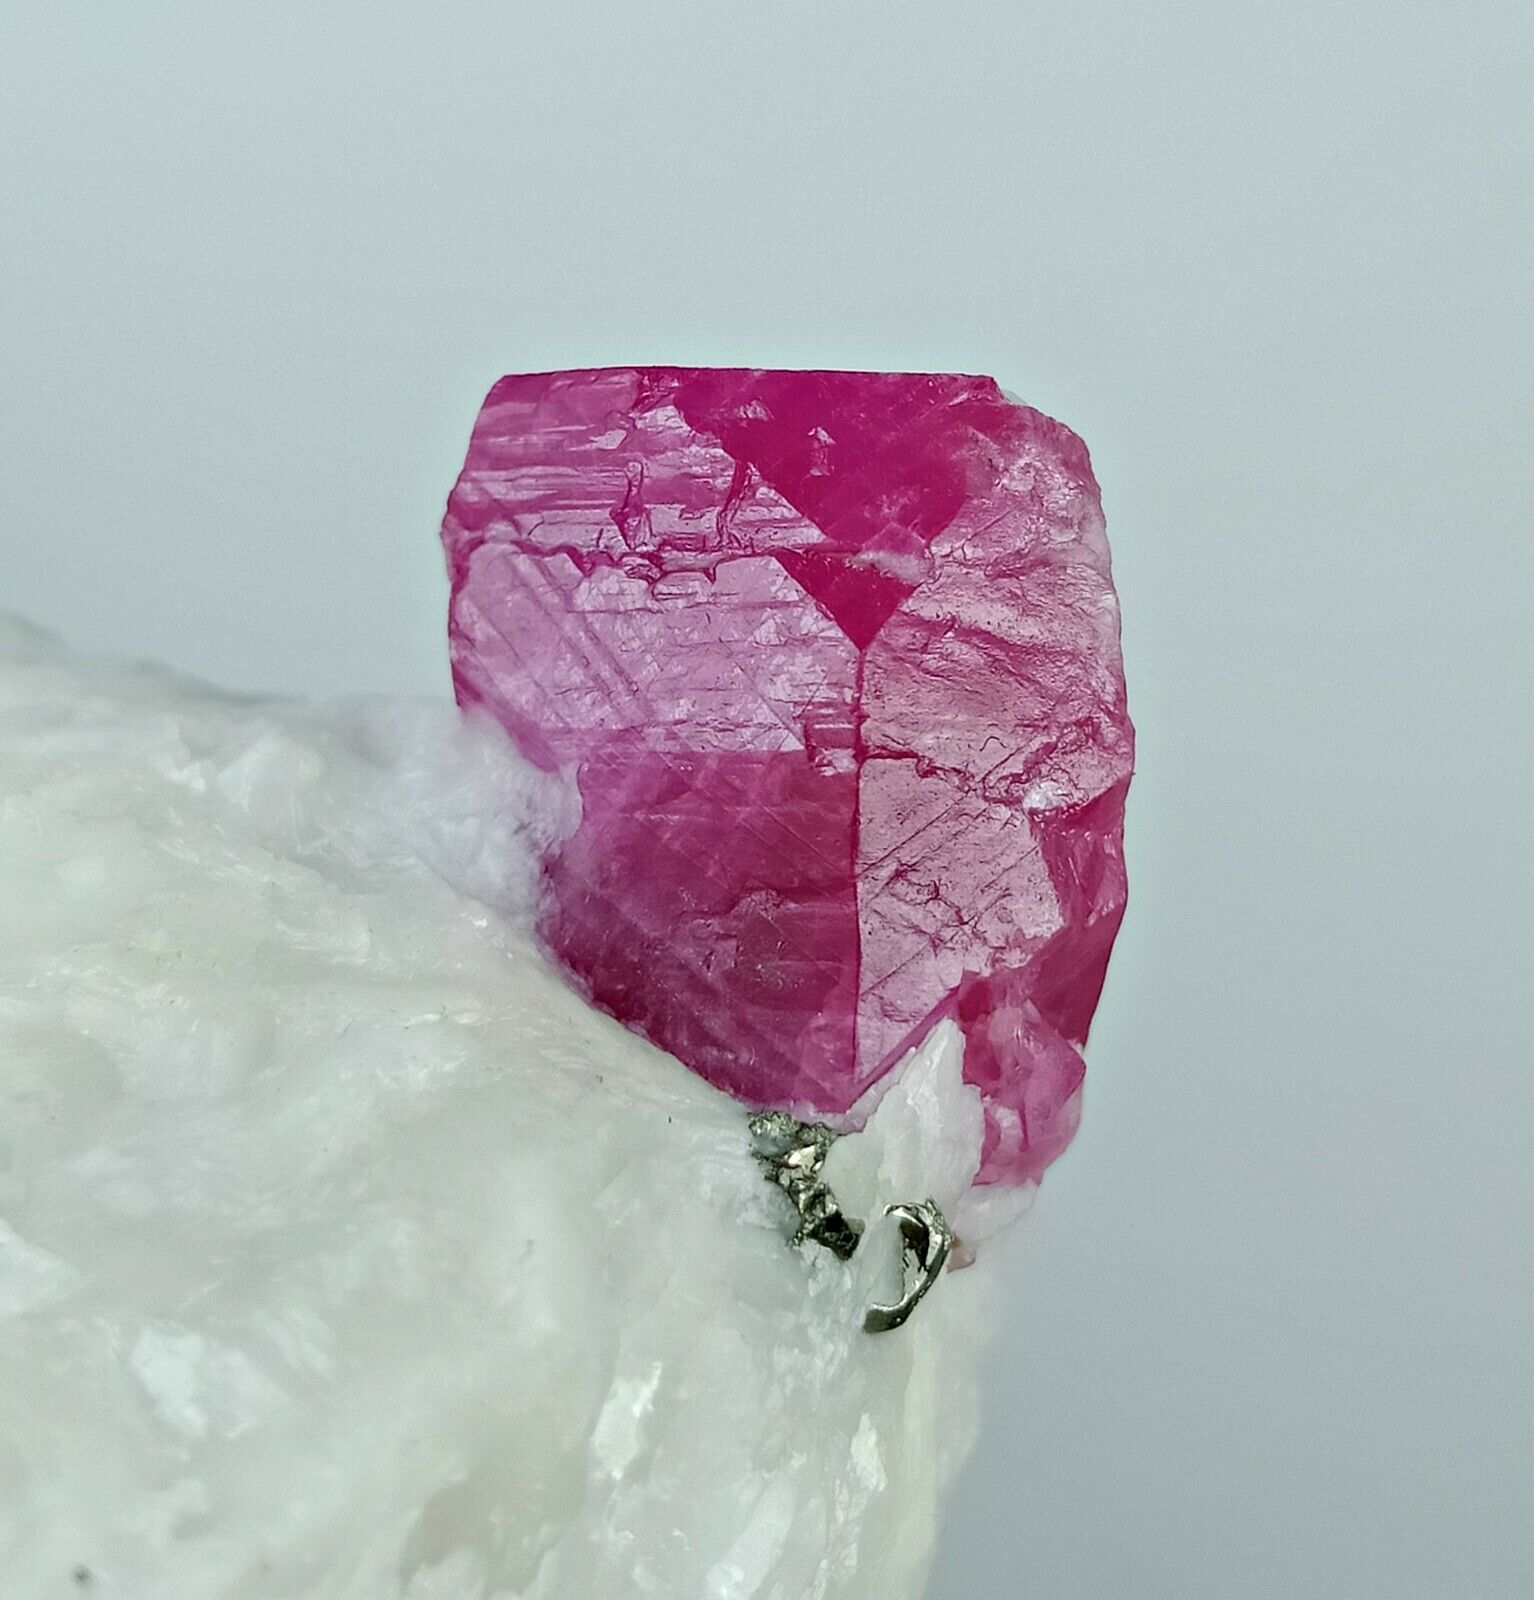 270 CT Excellent, Top quality Ruby Crystal on matrix @ Jegdalek Afghanistan